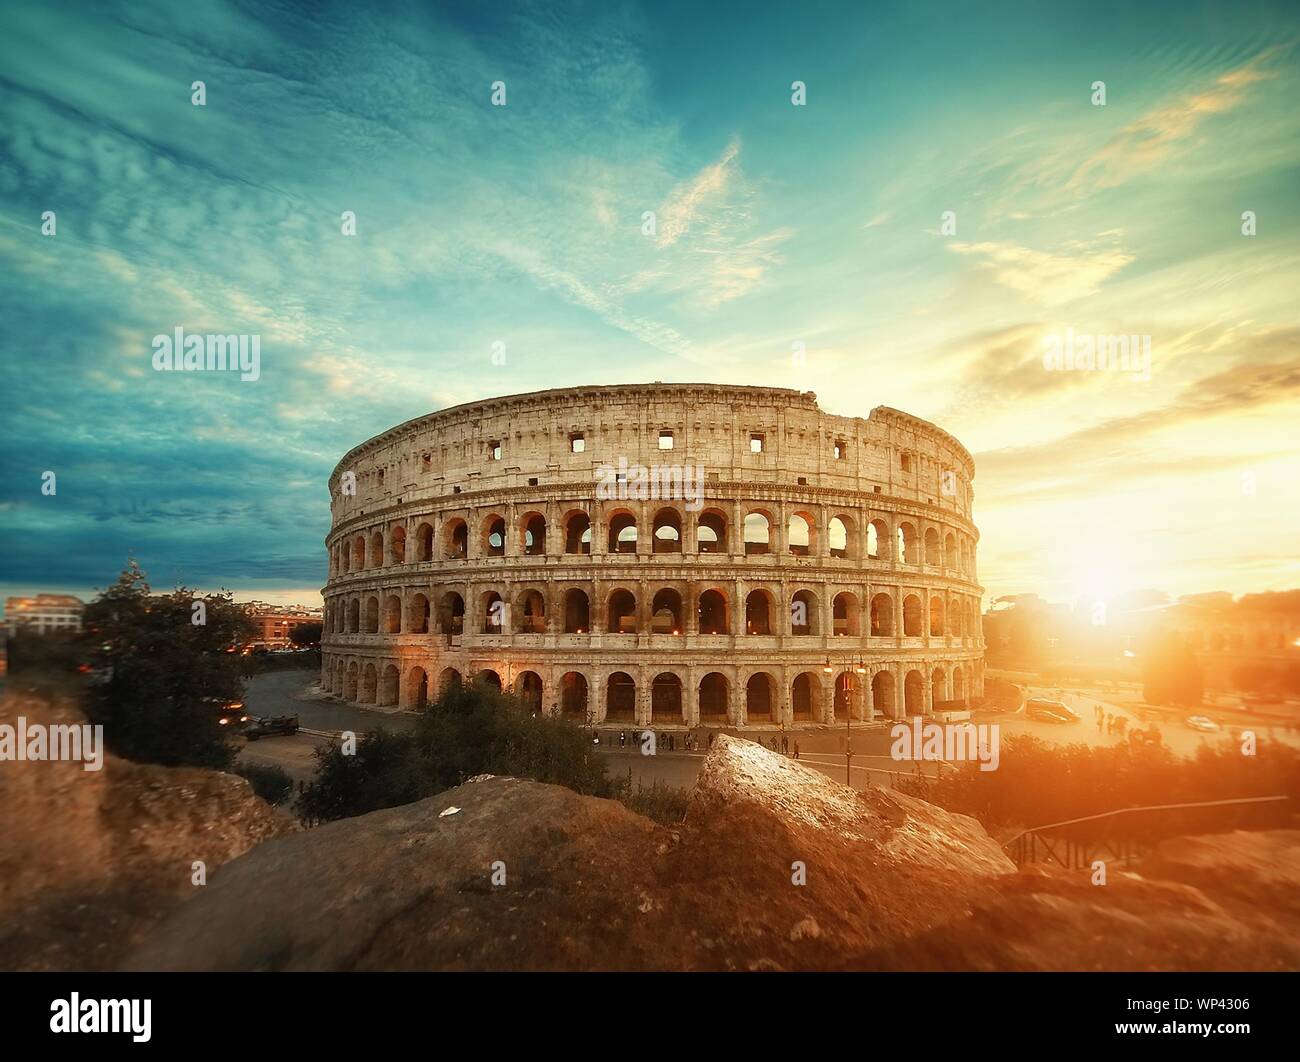 Beautiful shot of the famous Roman Colosseum amphitheater under the  breathtaking sky at sunrise Stock Photo - Alamy